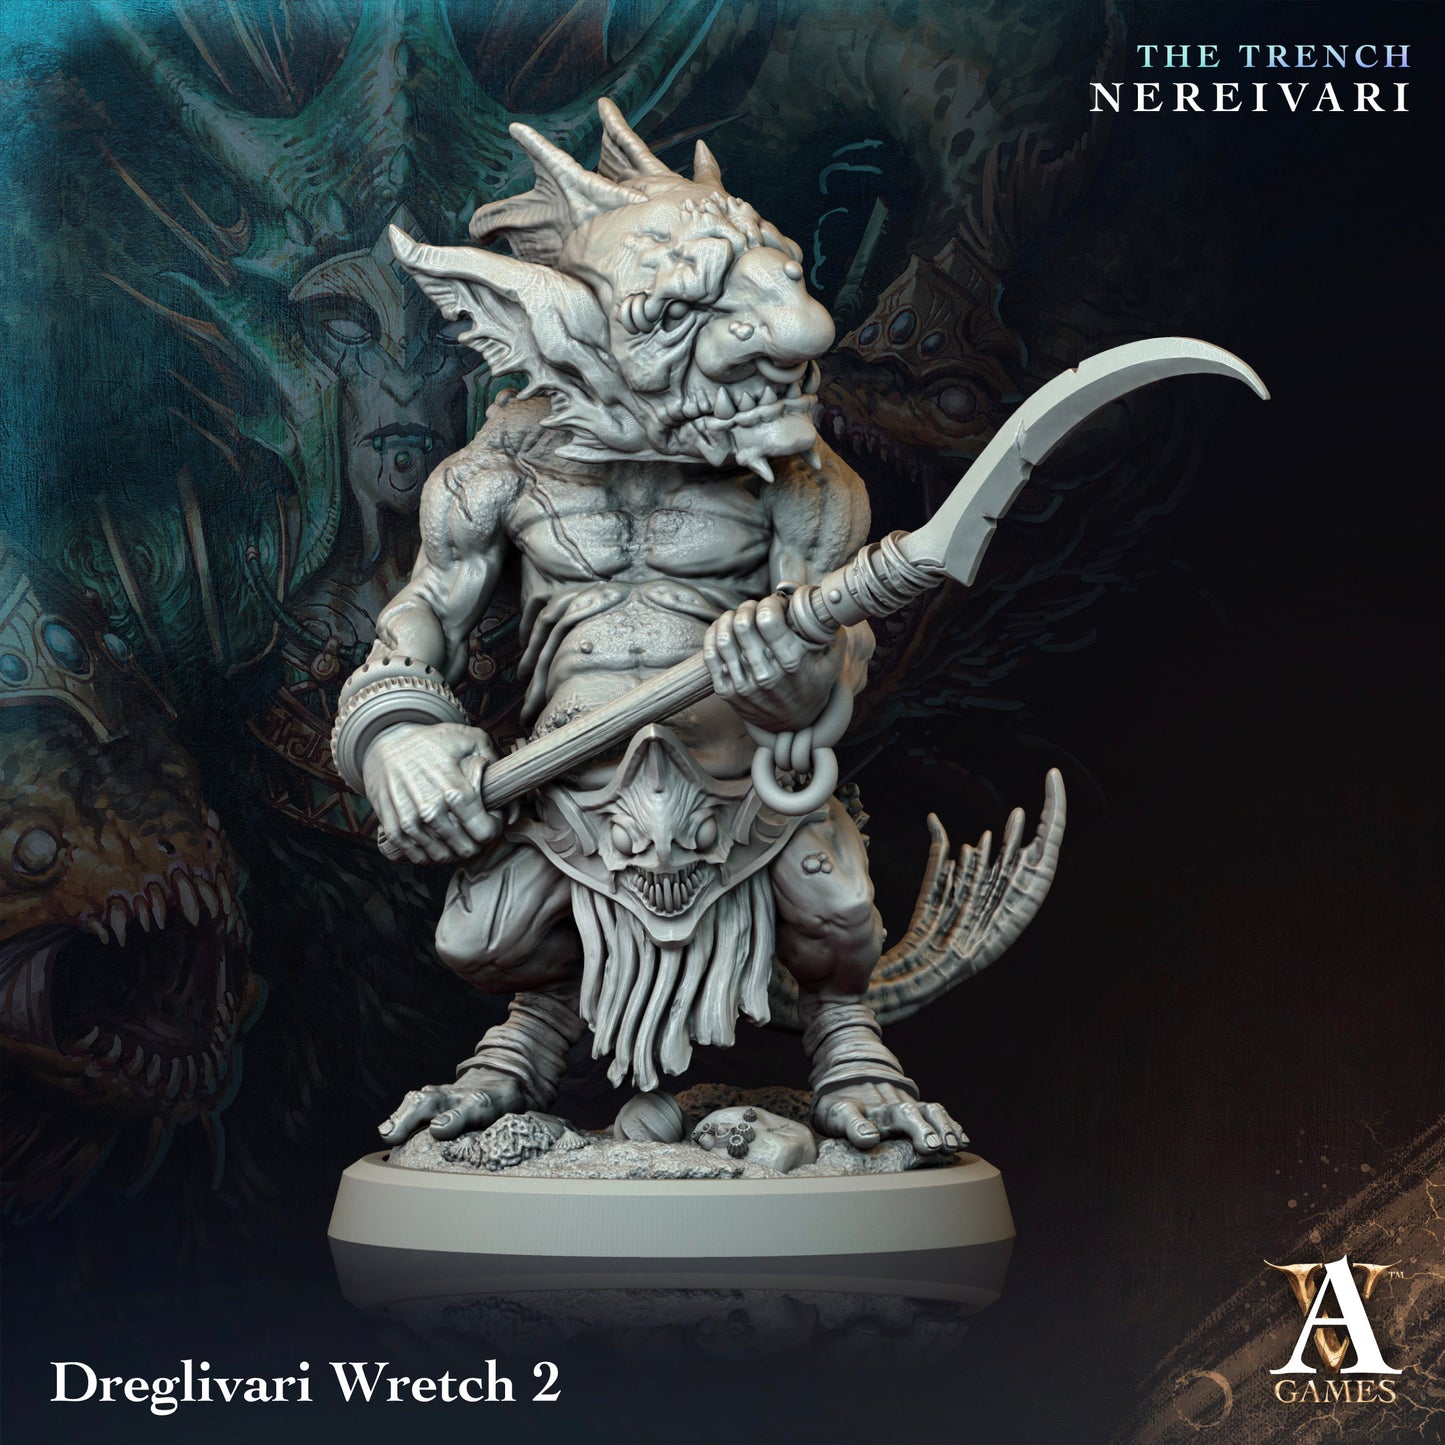 Dreglivari Wretch -The Trench - Nereivari